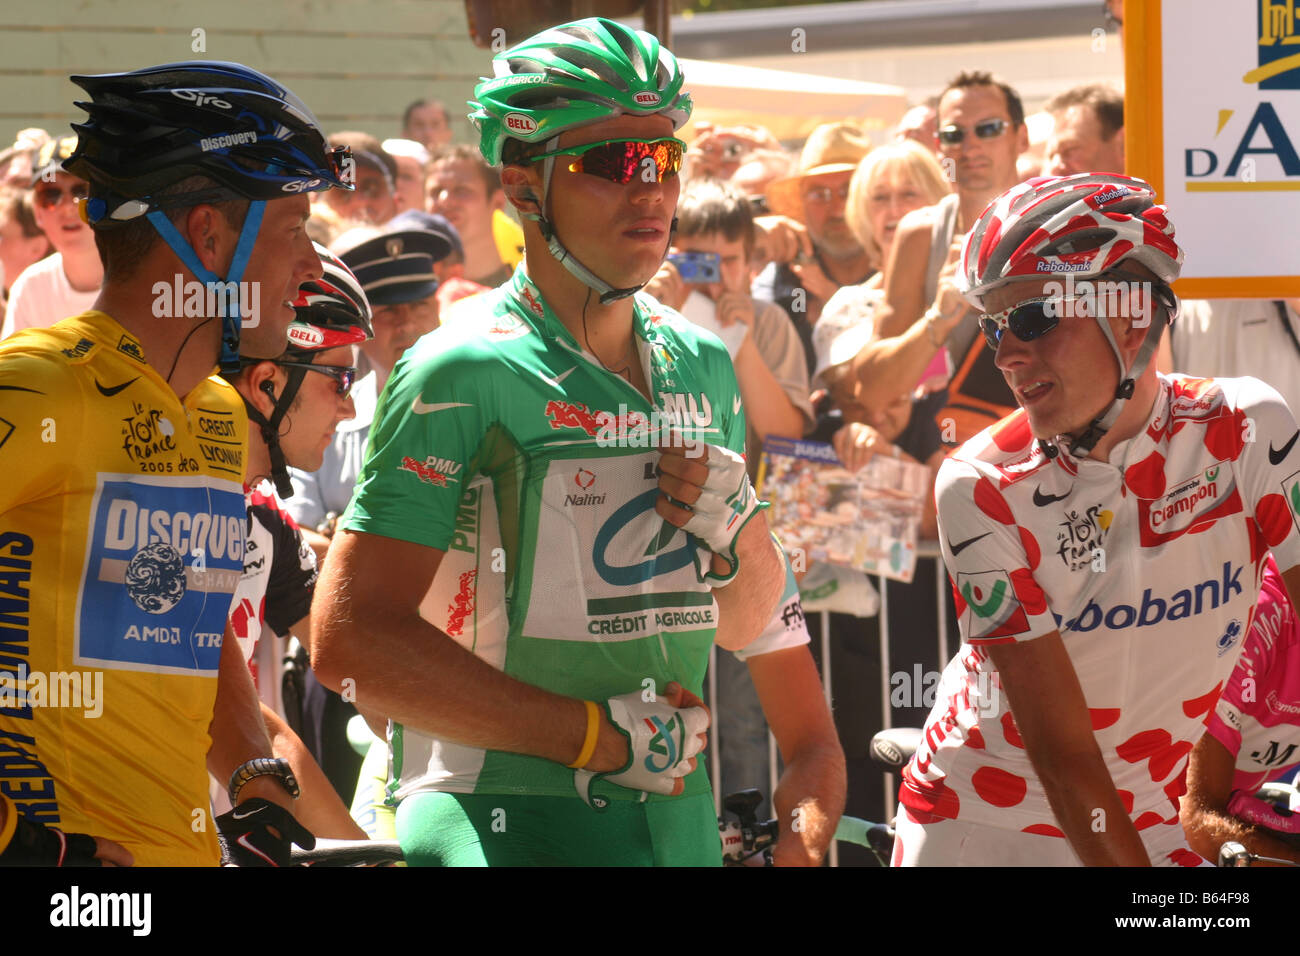 Medikament cheat Armstrong Tour de France gelbe Trikot, grüne Trikot und Polodott Jersey alle im Chat zu Beginn einer Etappe Stockfoto